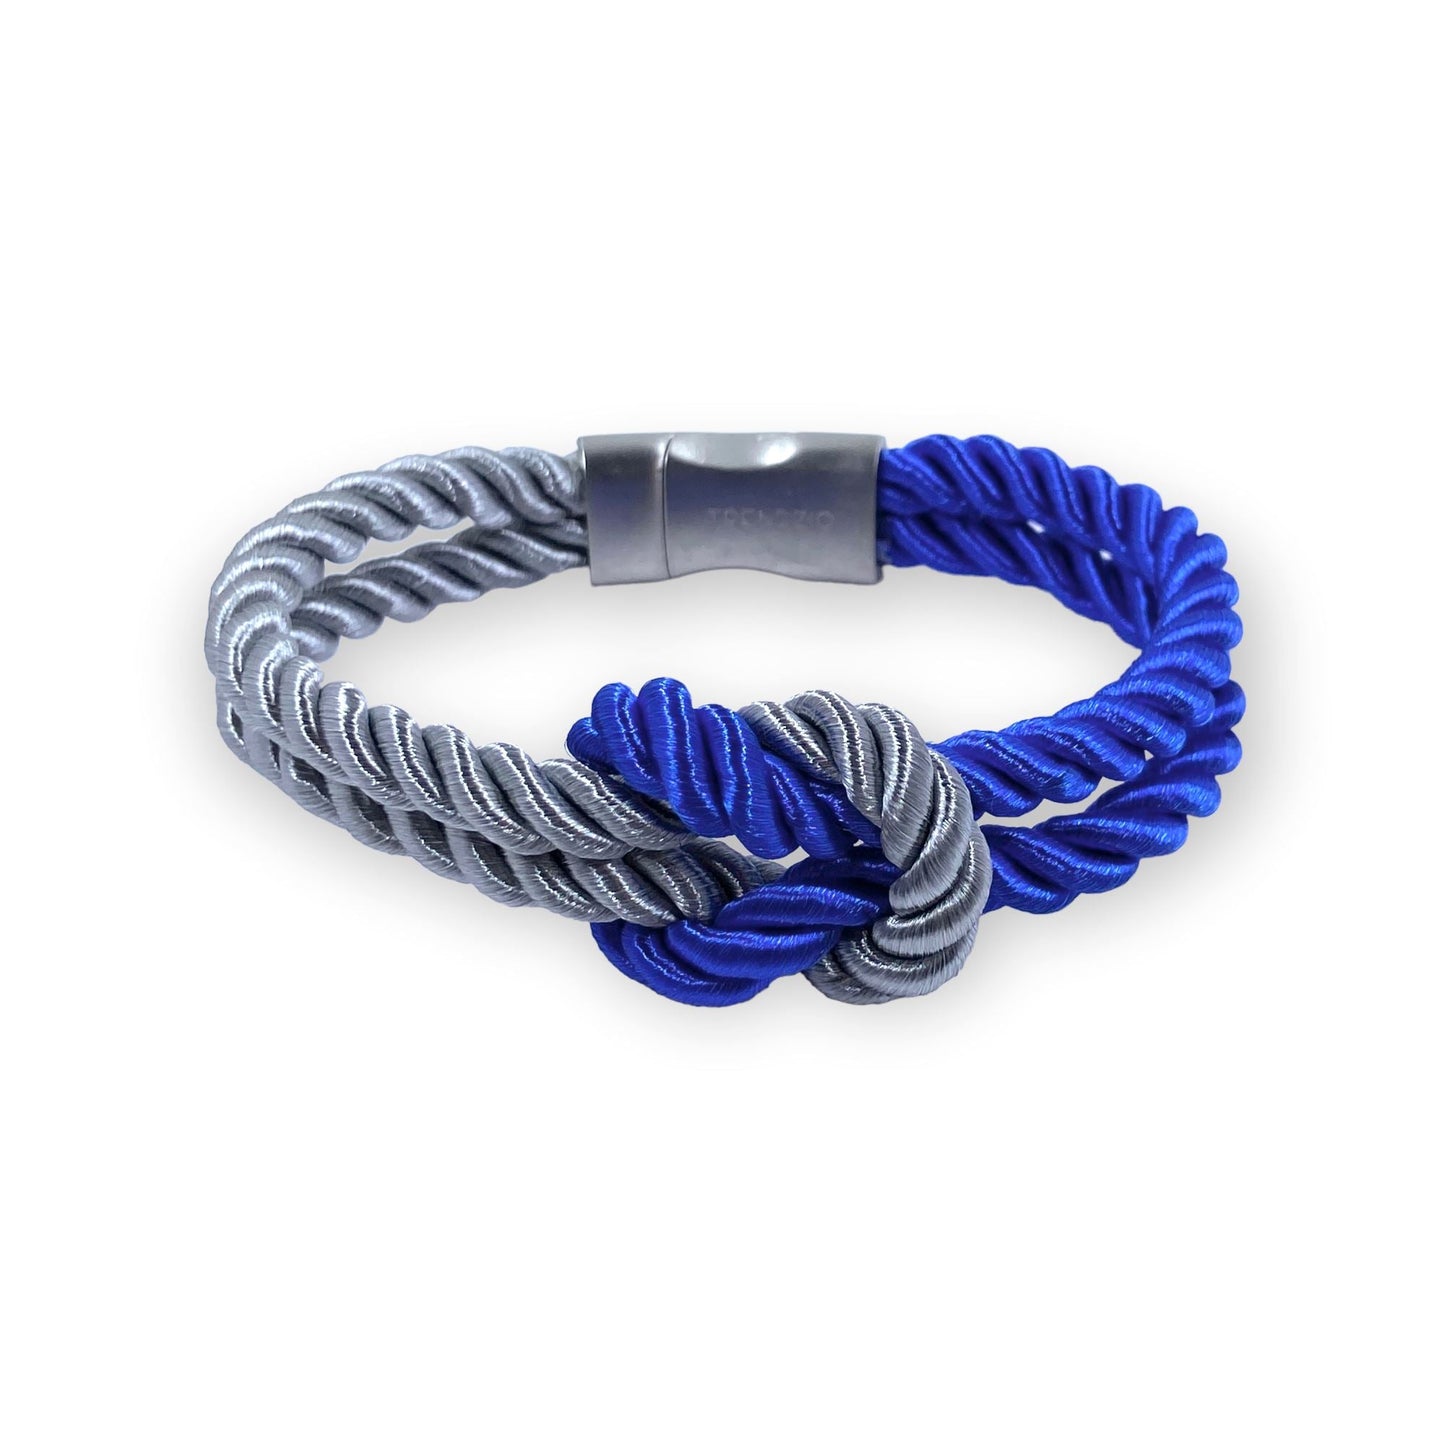 The Original Love Knot Satin Rope Bracelet- Blue and Grey Bracelets Trendzio Blue and Grey 